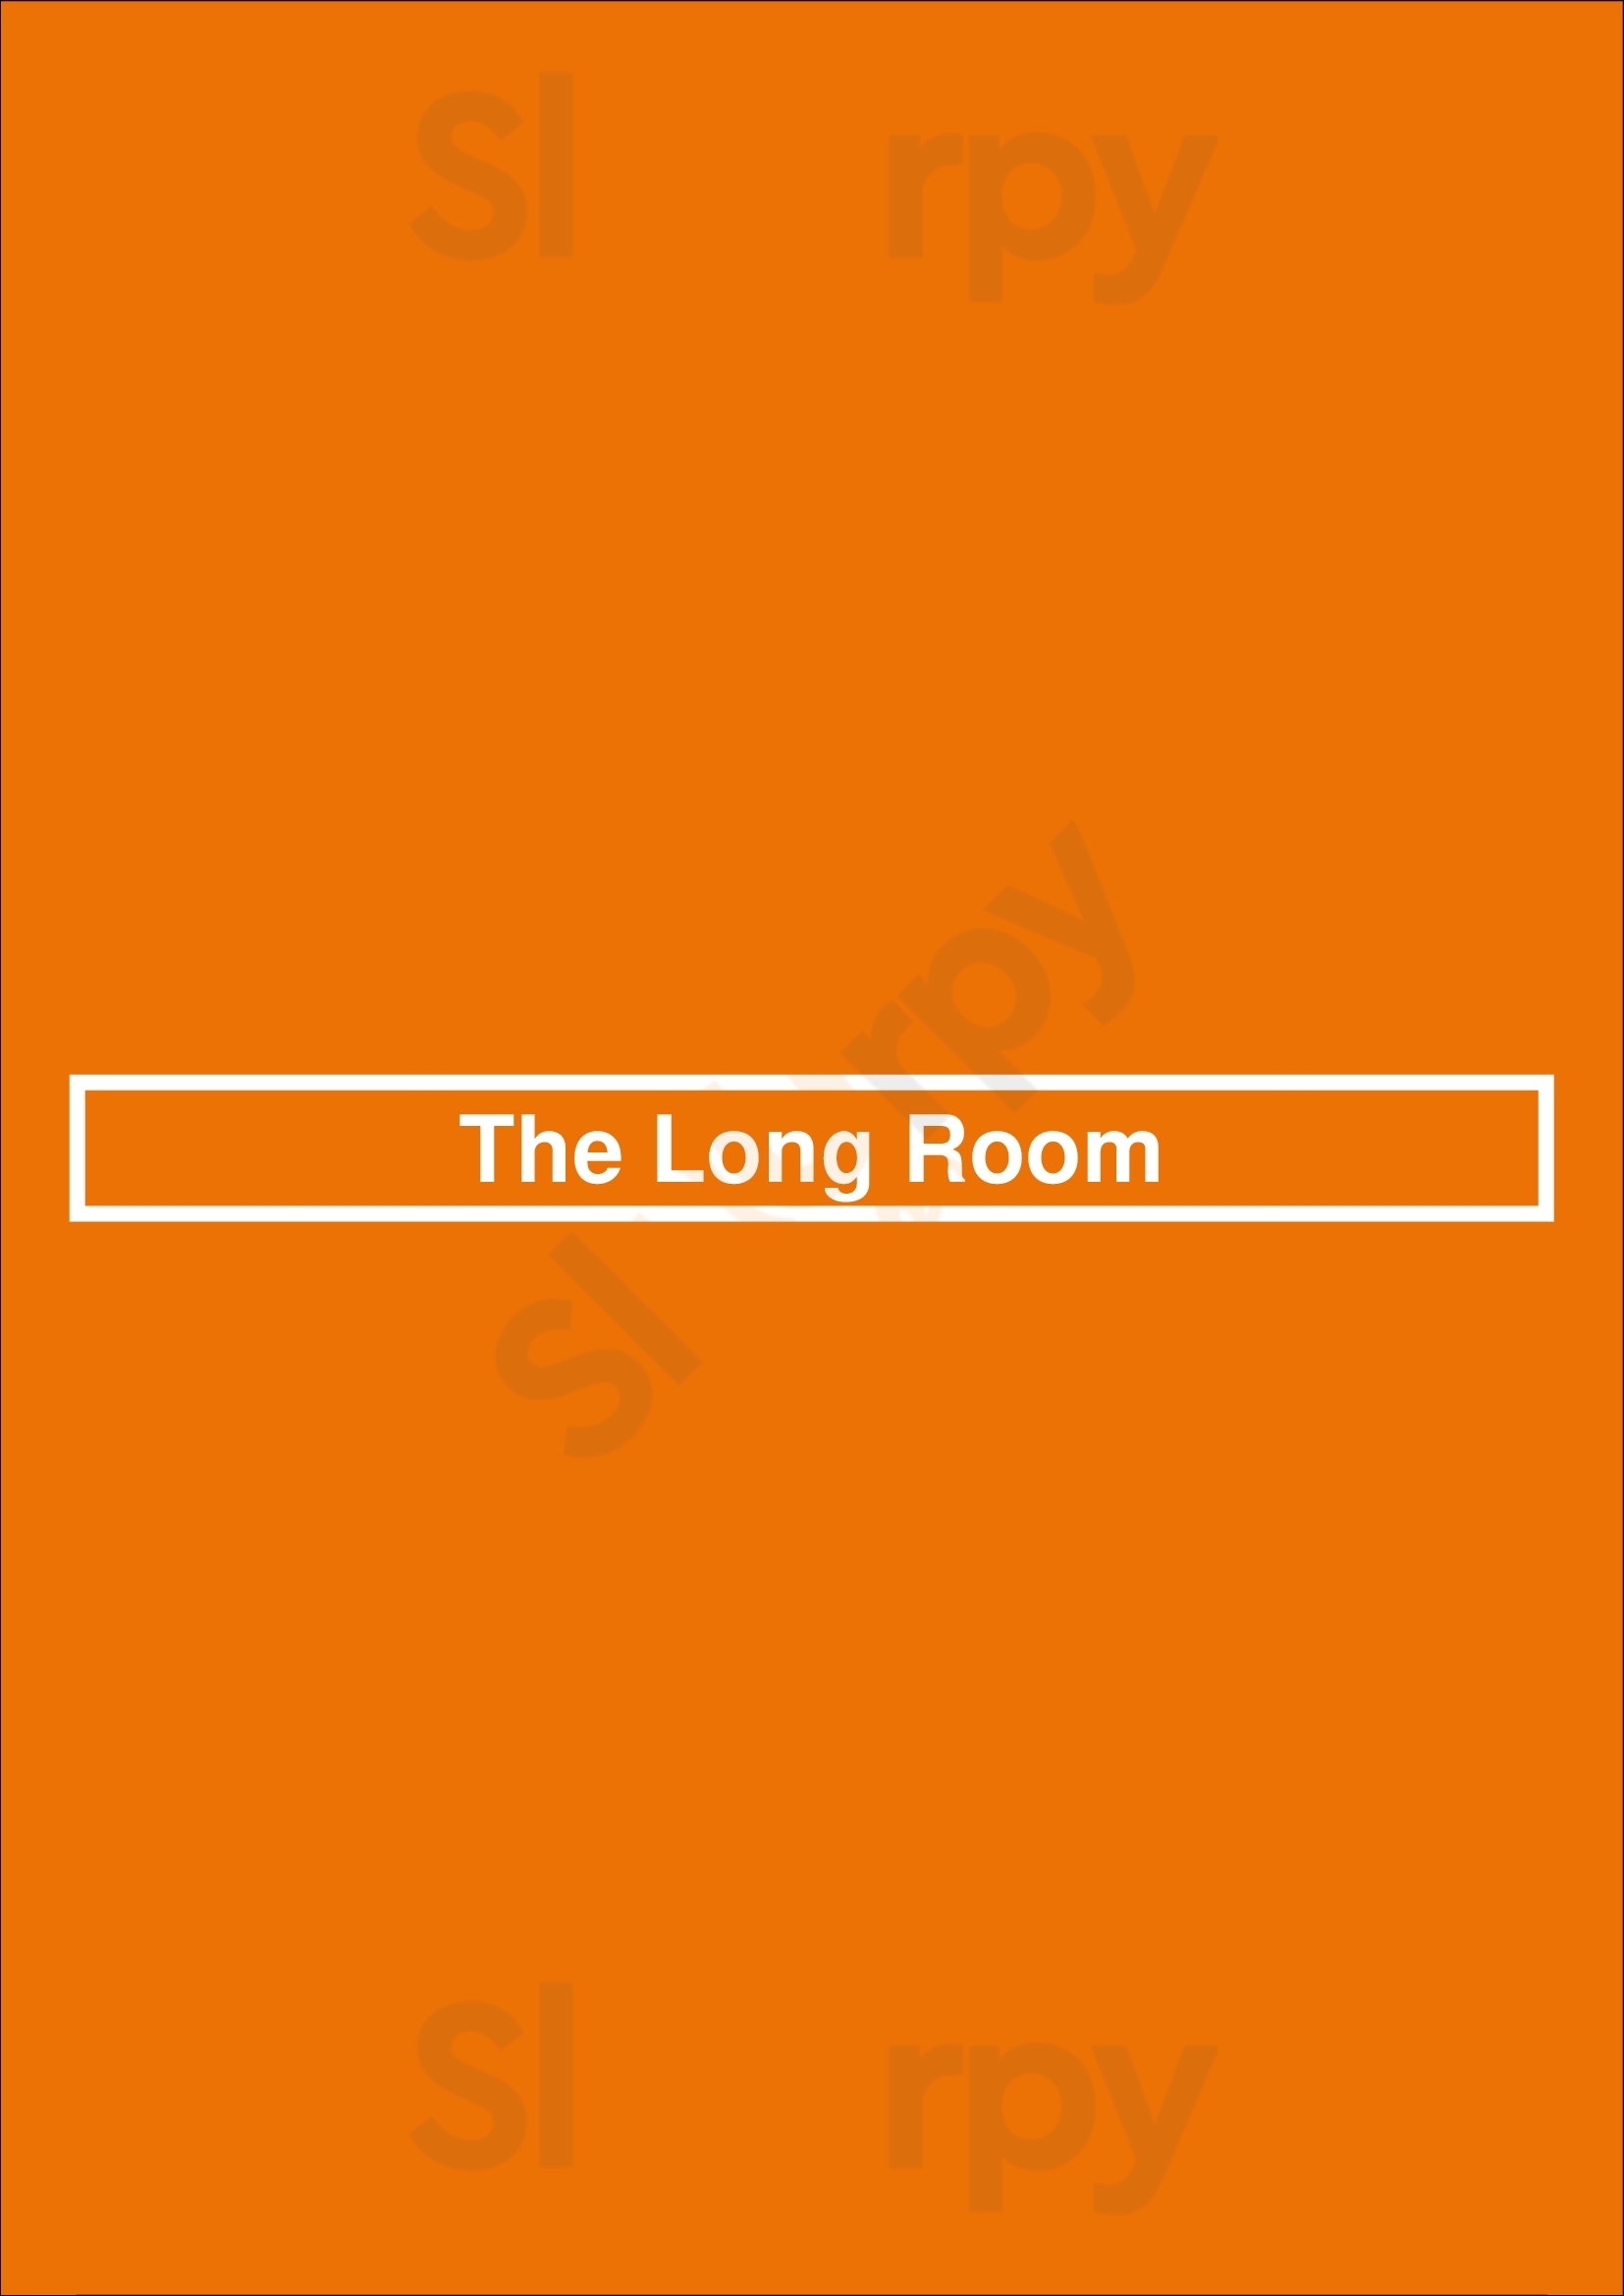 The Long Room New York City Menu - 1